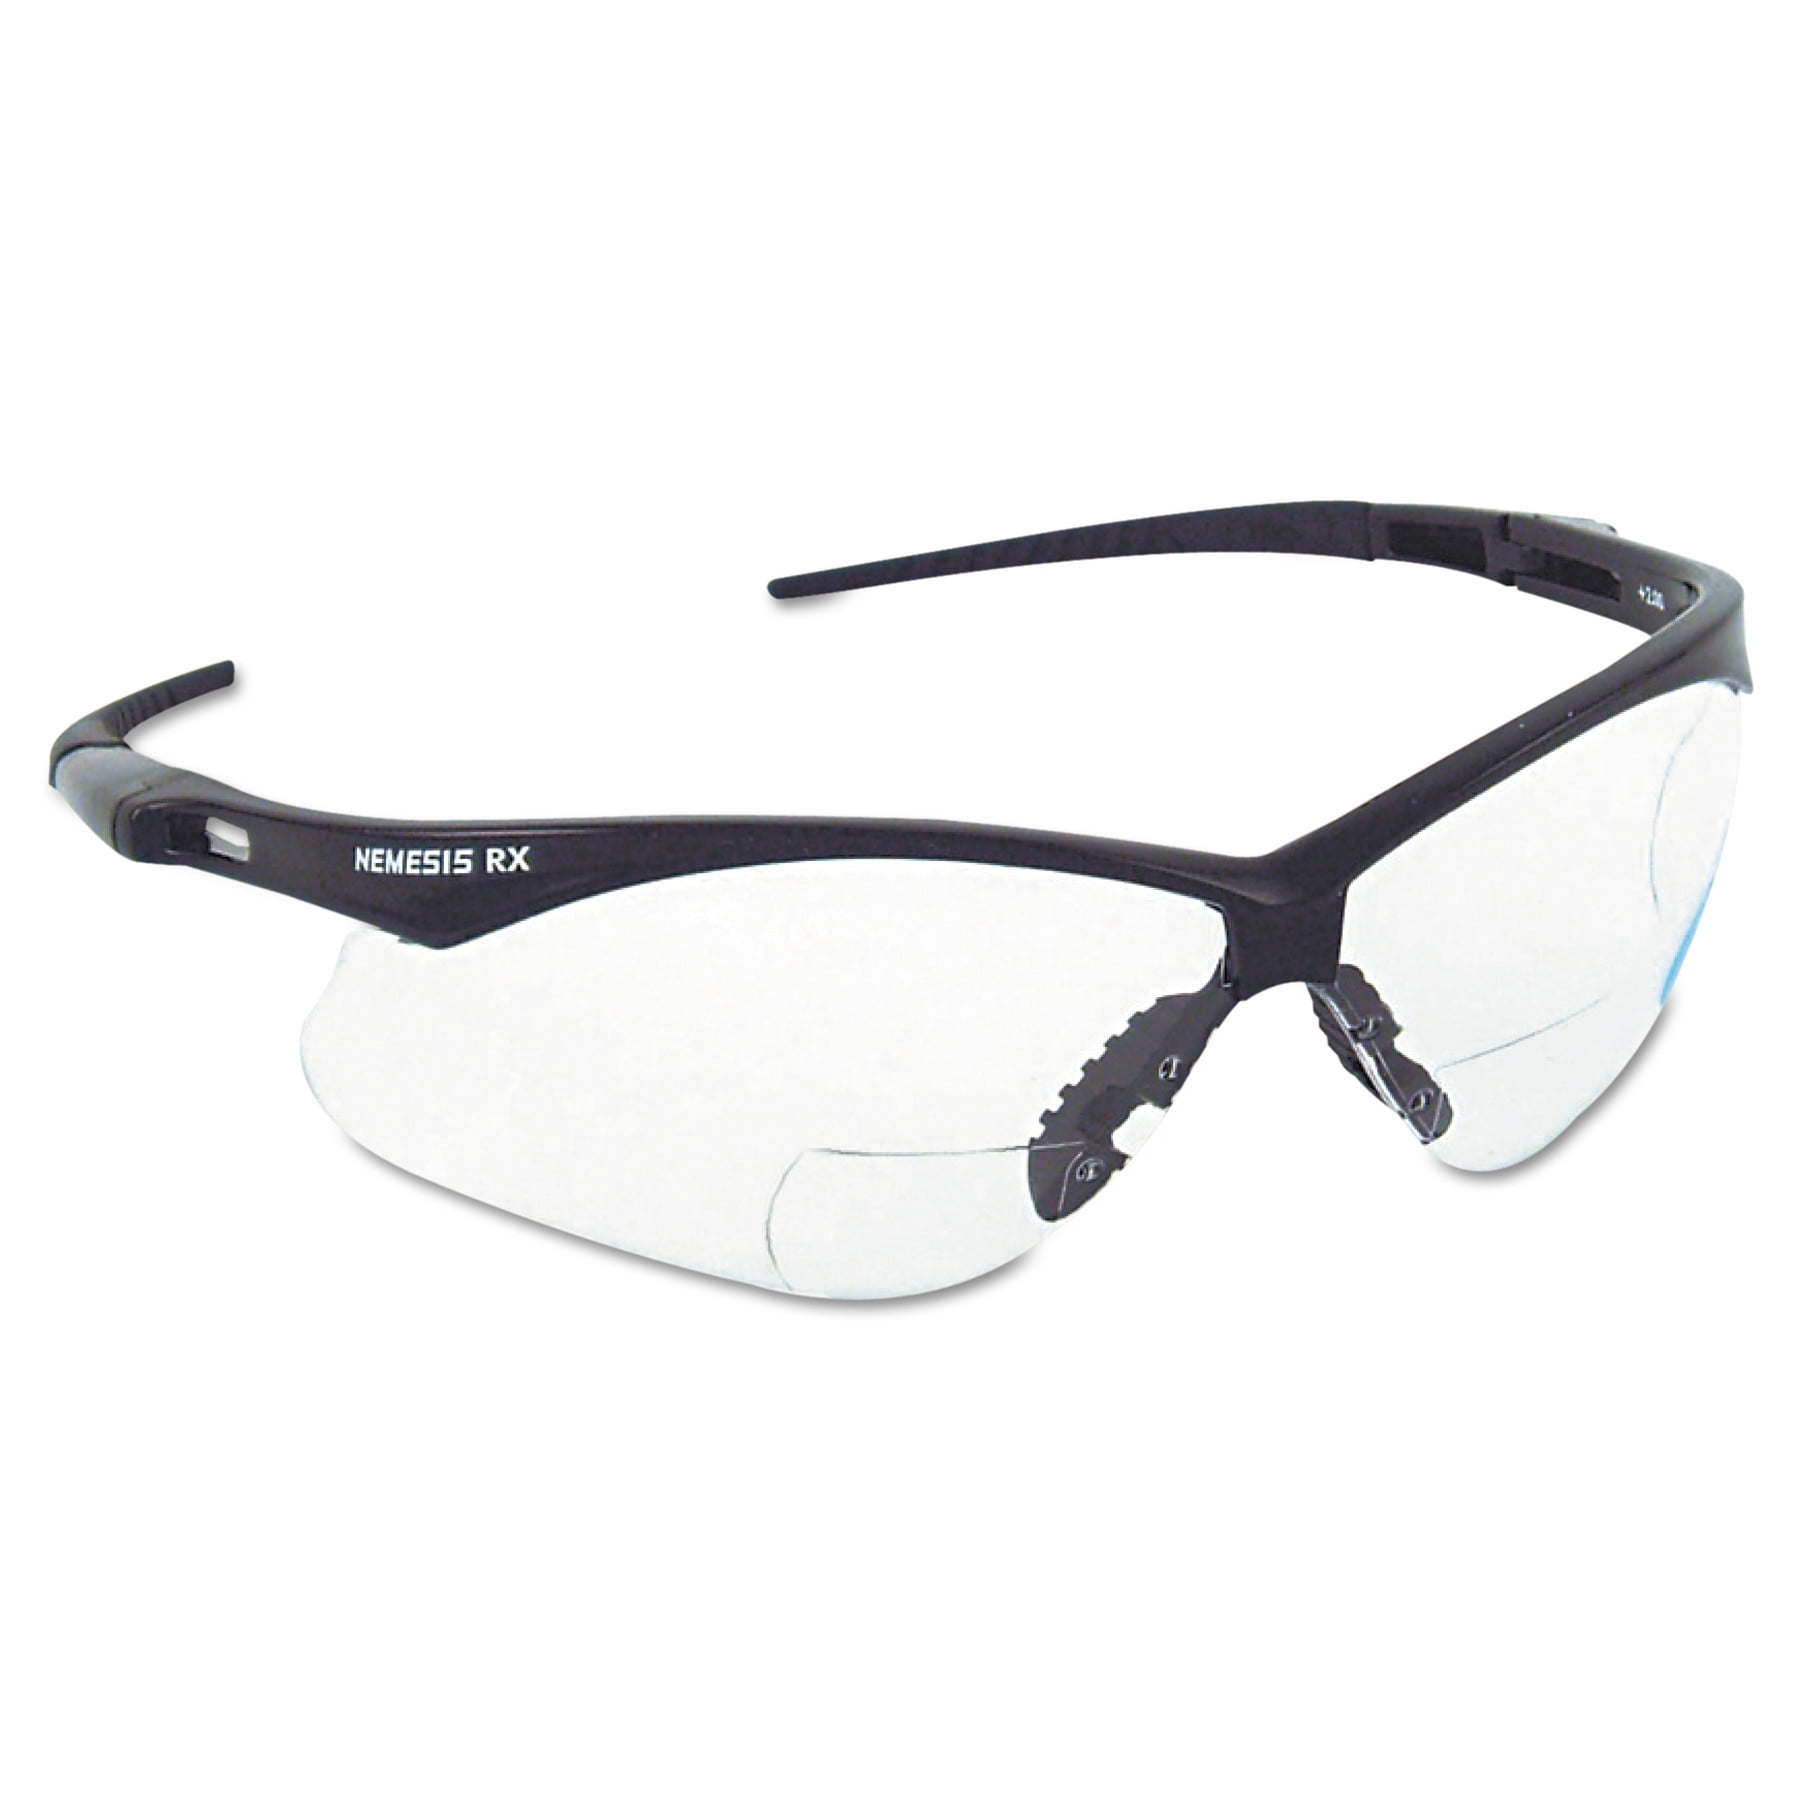 IRUV 5.0 for sale online 3 Pair Jackson Safety 3004761 Nemesis Cutting Glasses Black Frame 